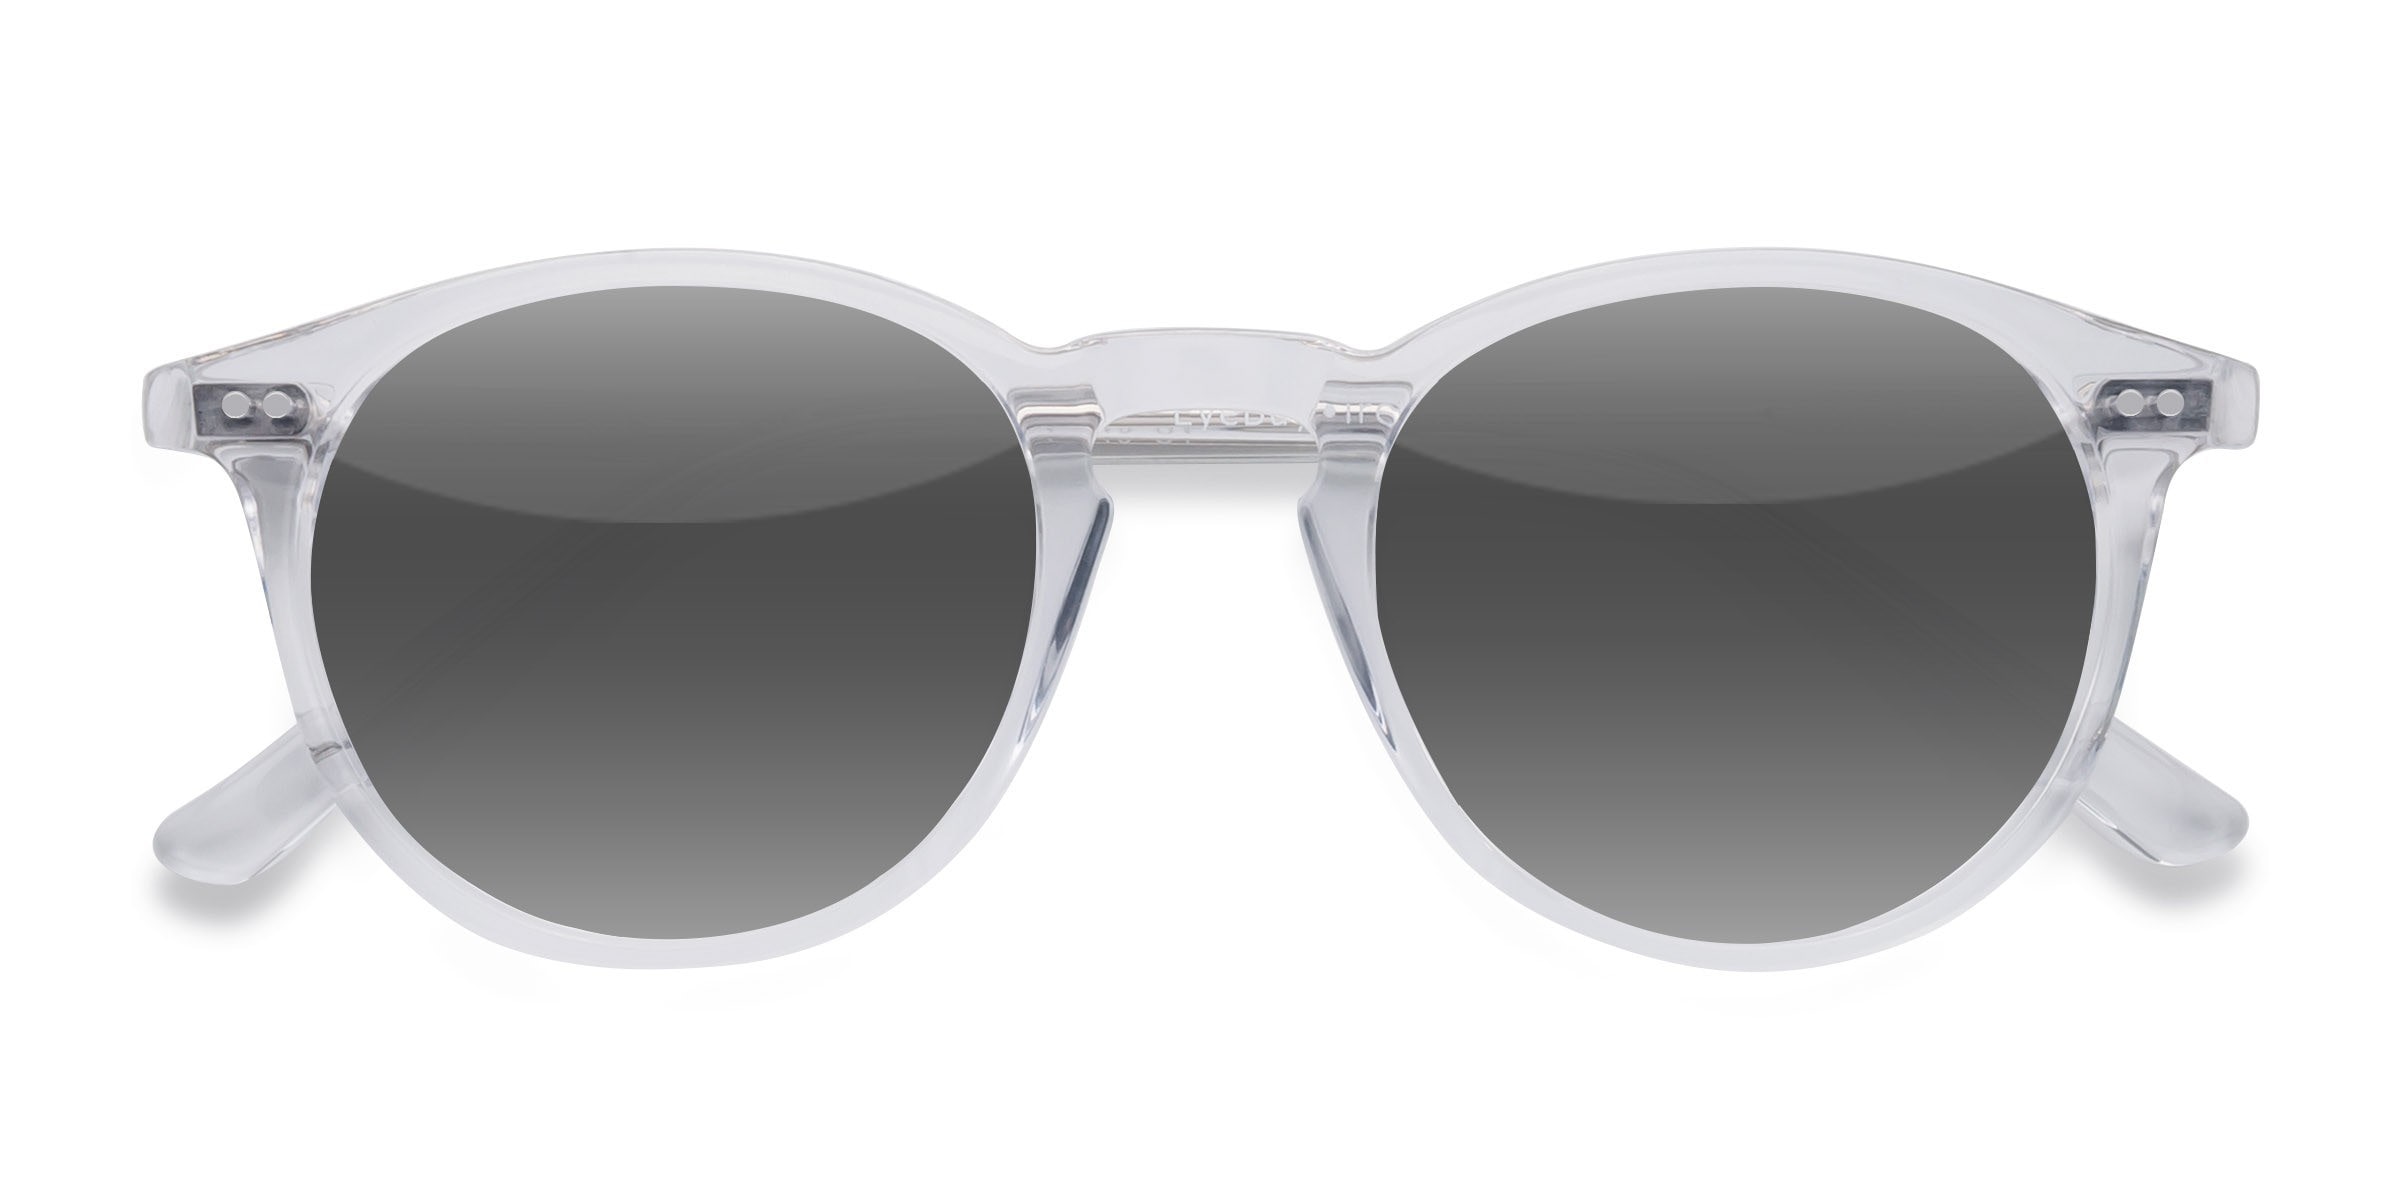 Clear Lens Square UV400 Sunglasses at Rs 1405 | फैशन धूप के चश्मे, फैशन  सनग्लासेस - Force Motors, Tamluk | ID: 2850538571491